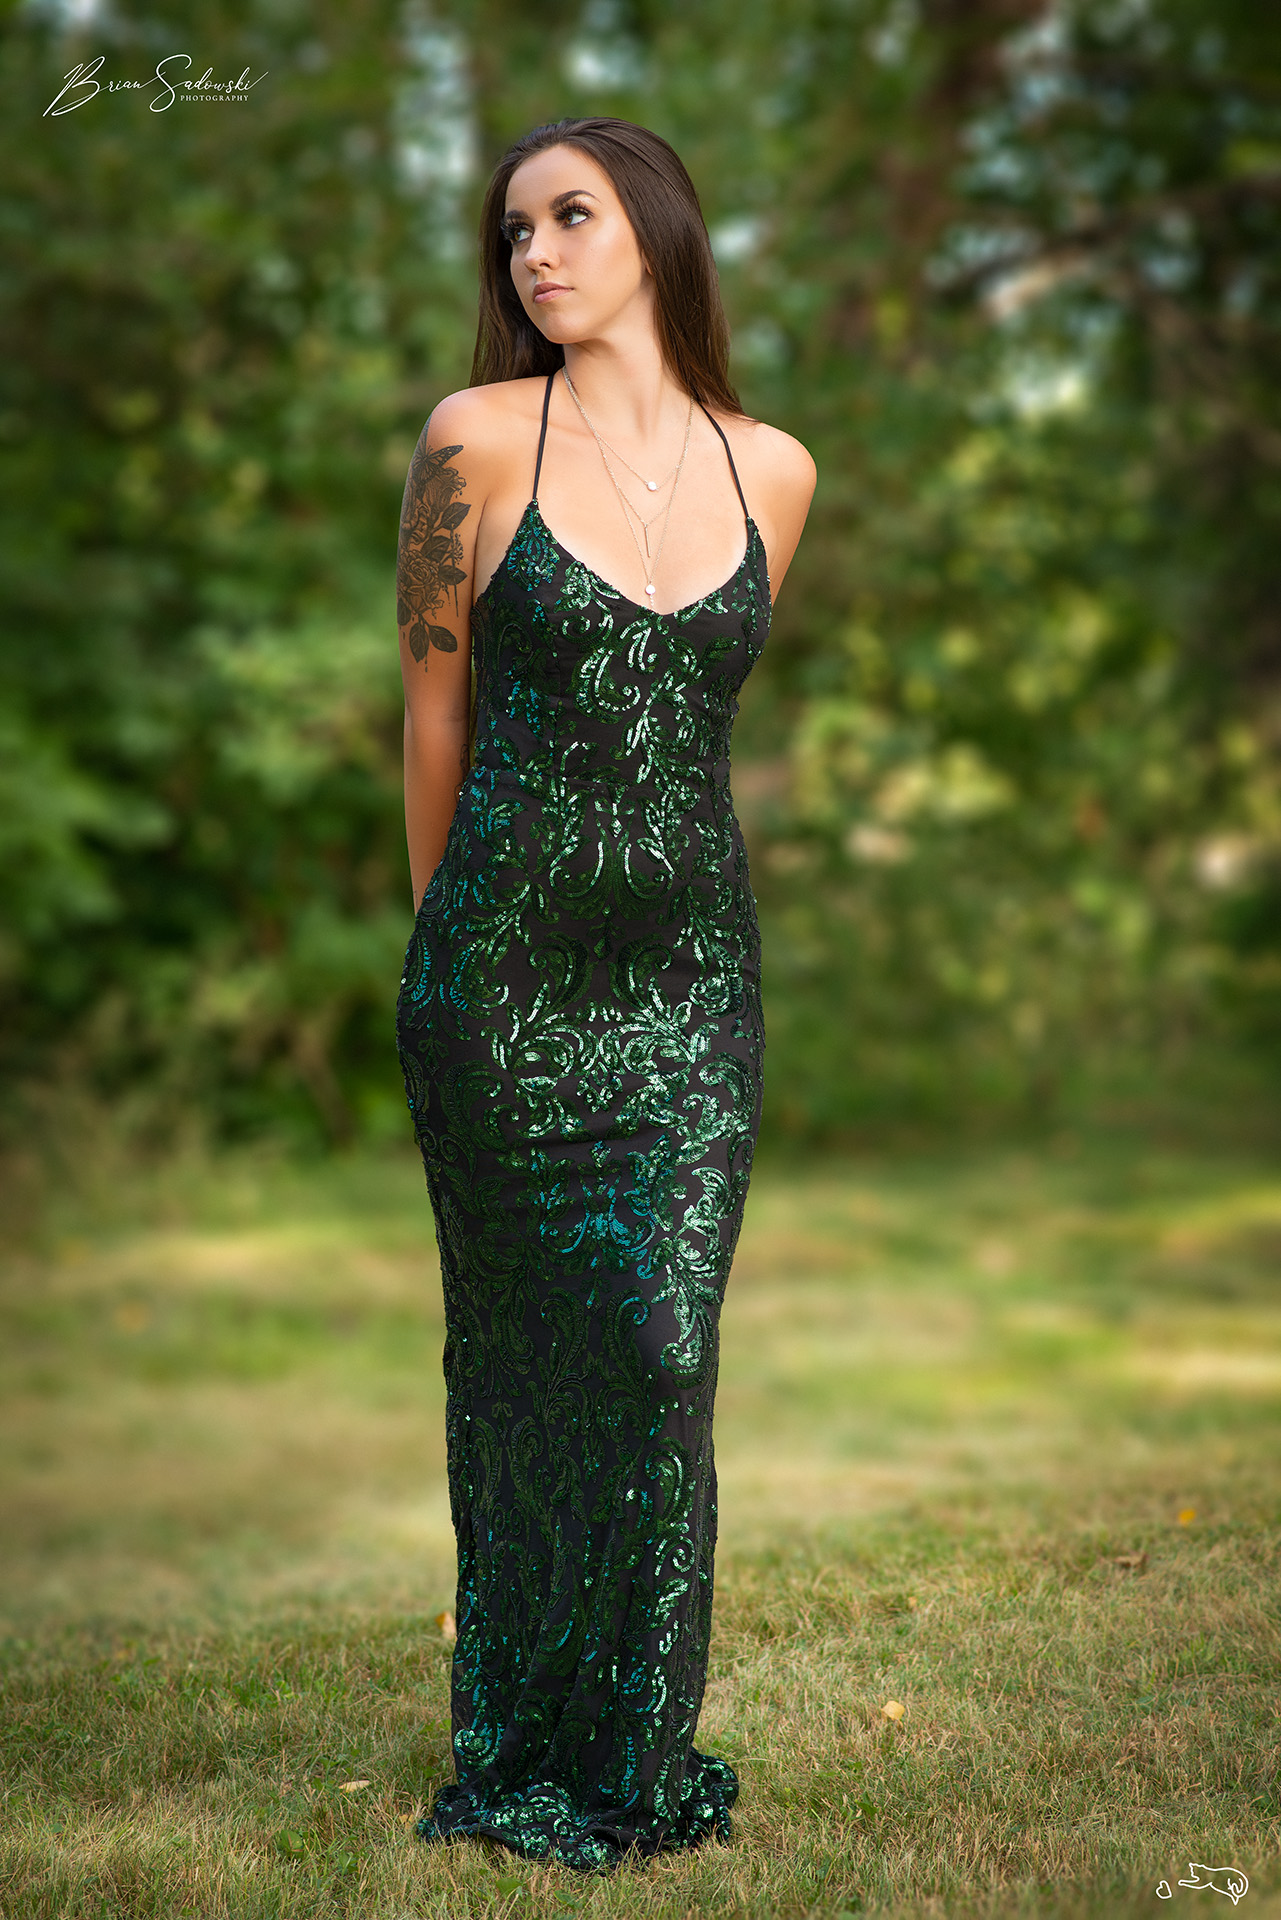 Haley Dubarry | Inked Cover Girl Model | Green Dress